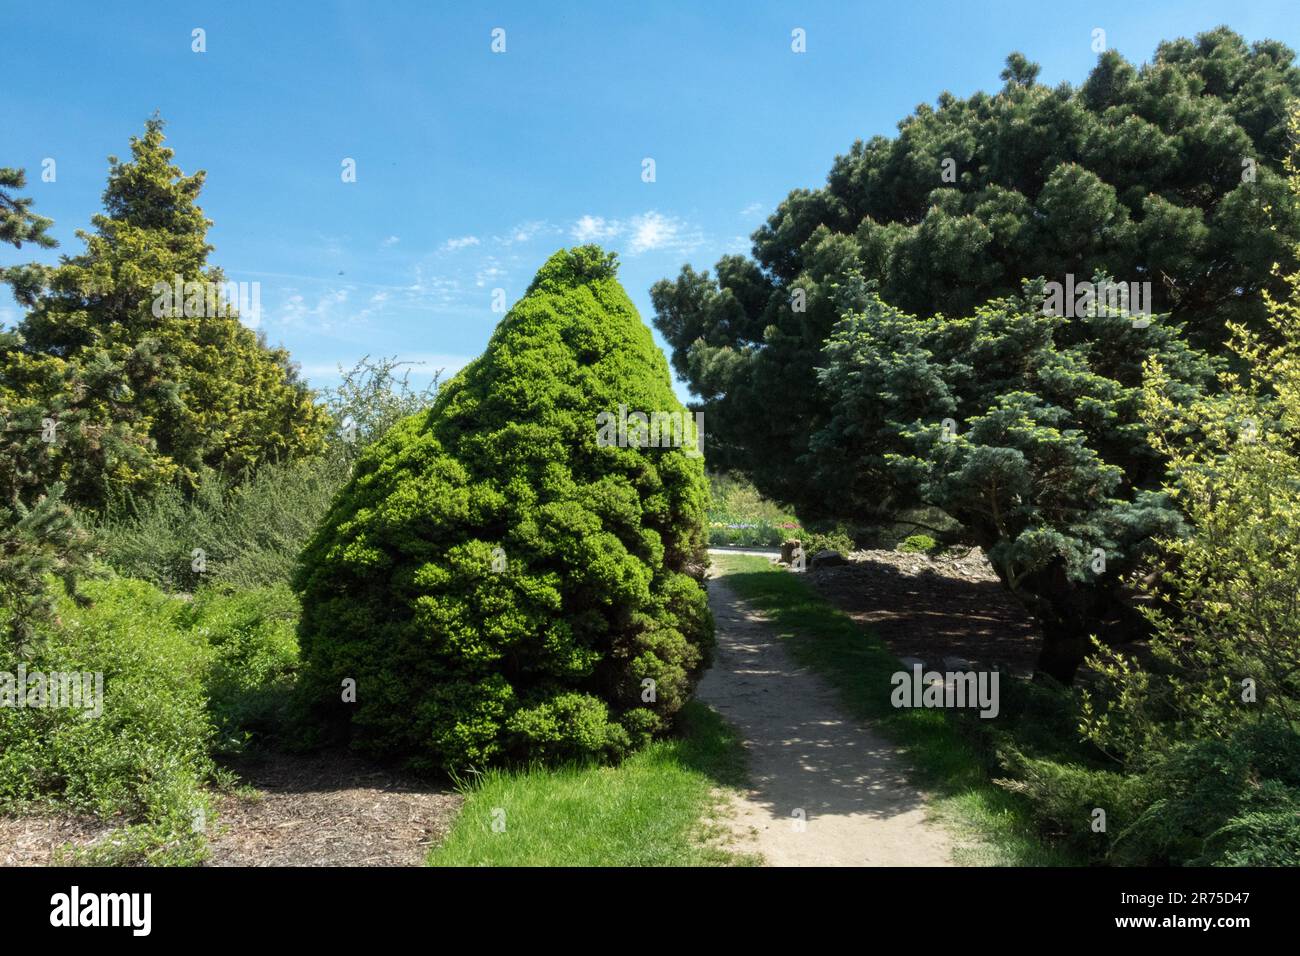 Garden scene, Coniferous, Tree, Picea glauca 'Conica' Alberta Spruce, Pinus sylvestris 'Bayeri', Chamaecyparis nootkatensis 'Aureovariegata' Stock Photo